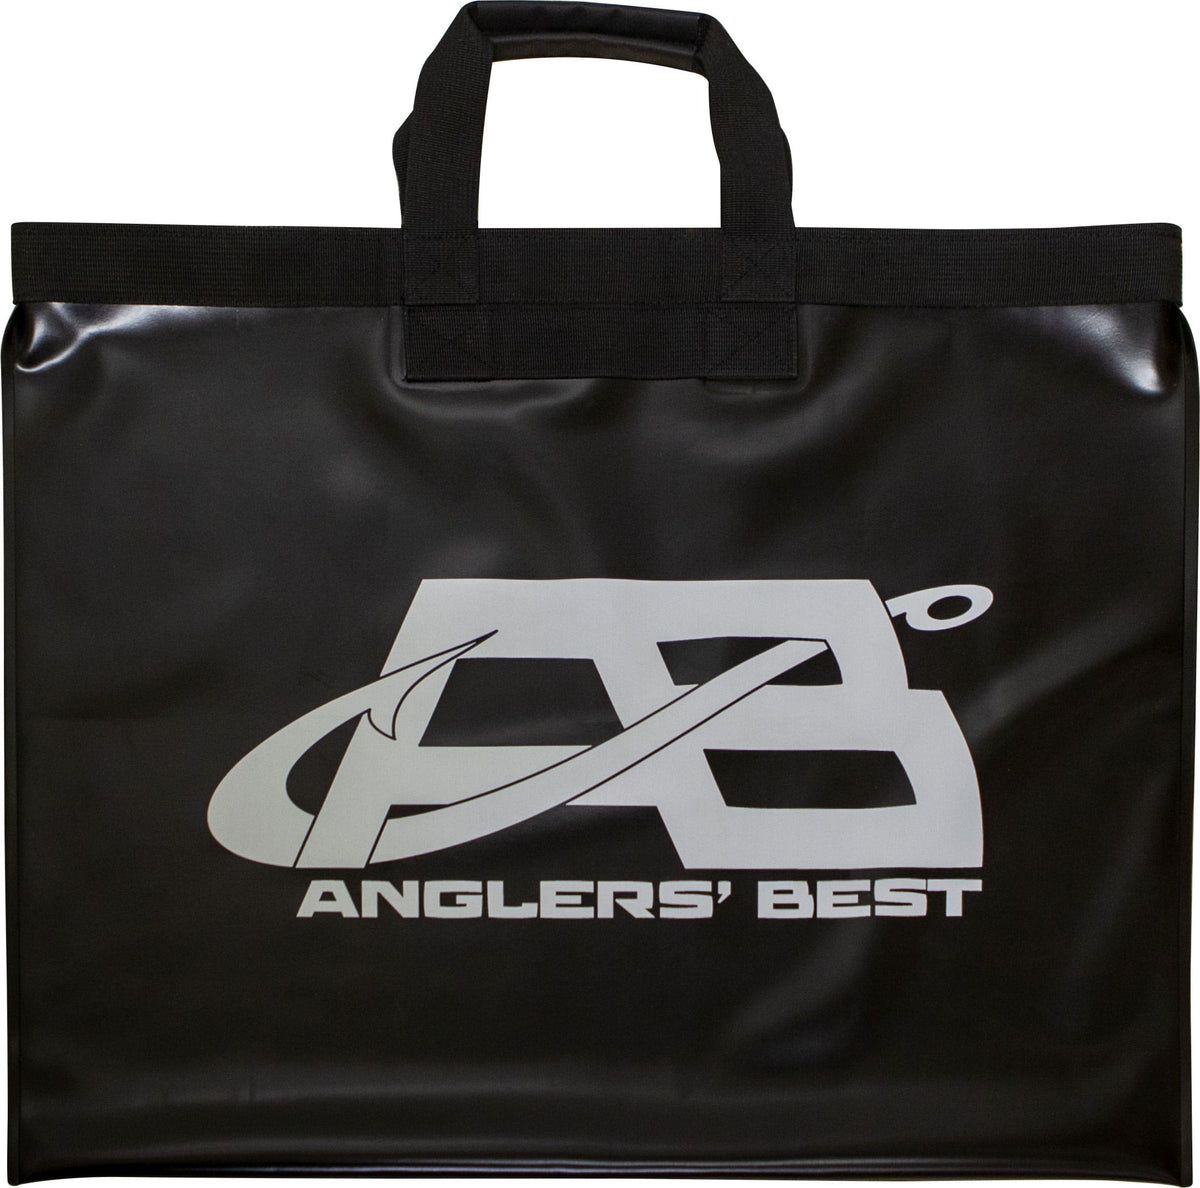 creek anglers device 2way bag リュック/バックパック 70%OFF 純正直販店 